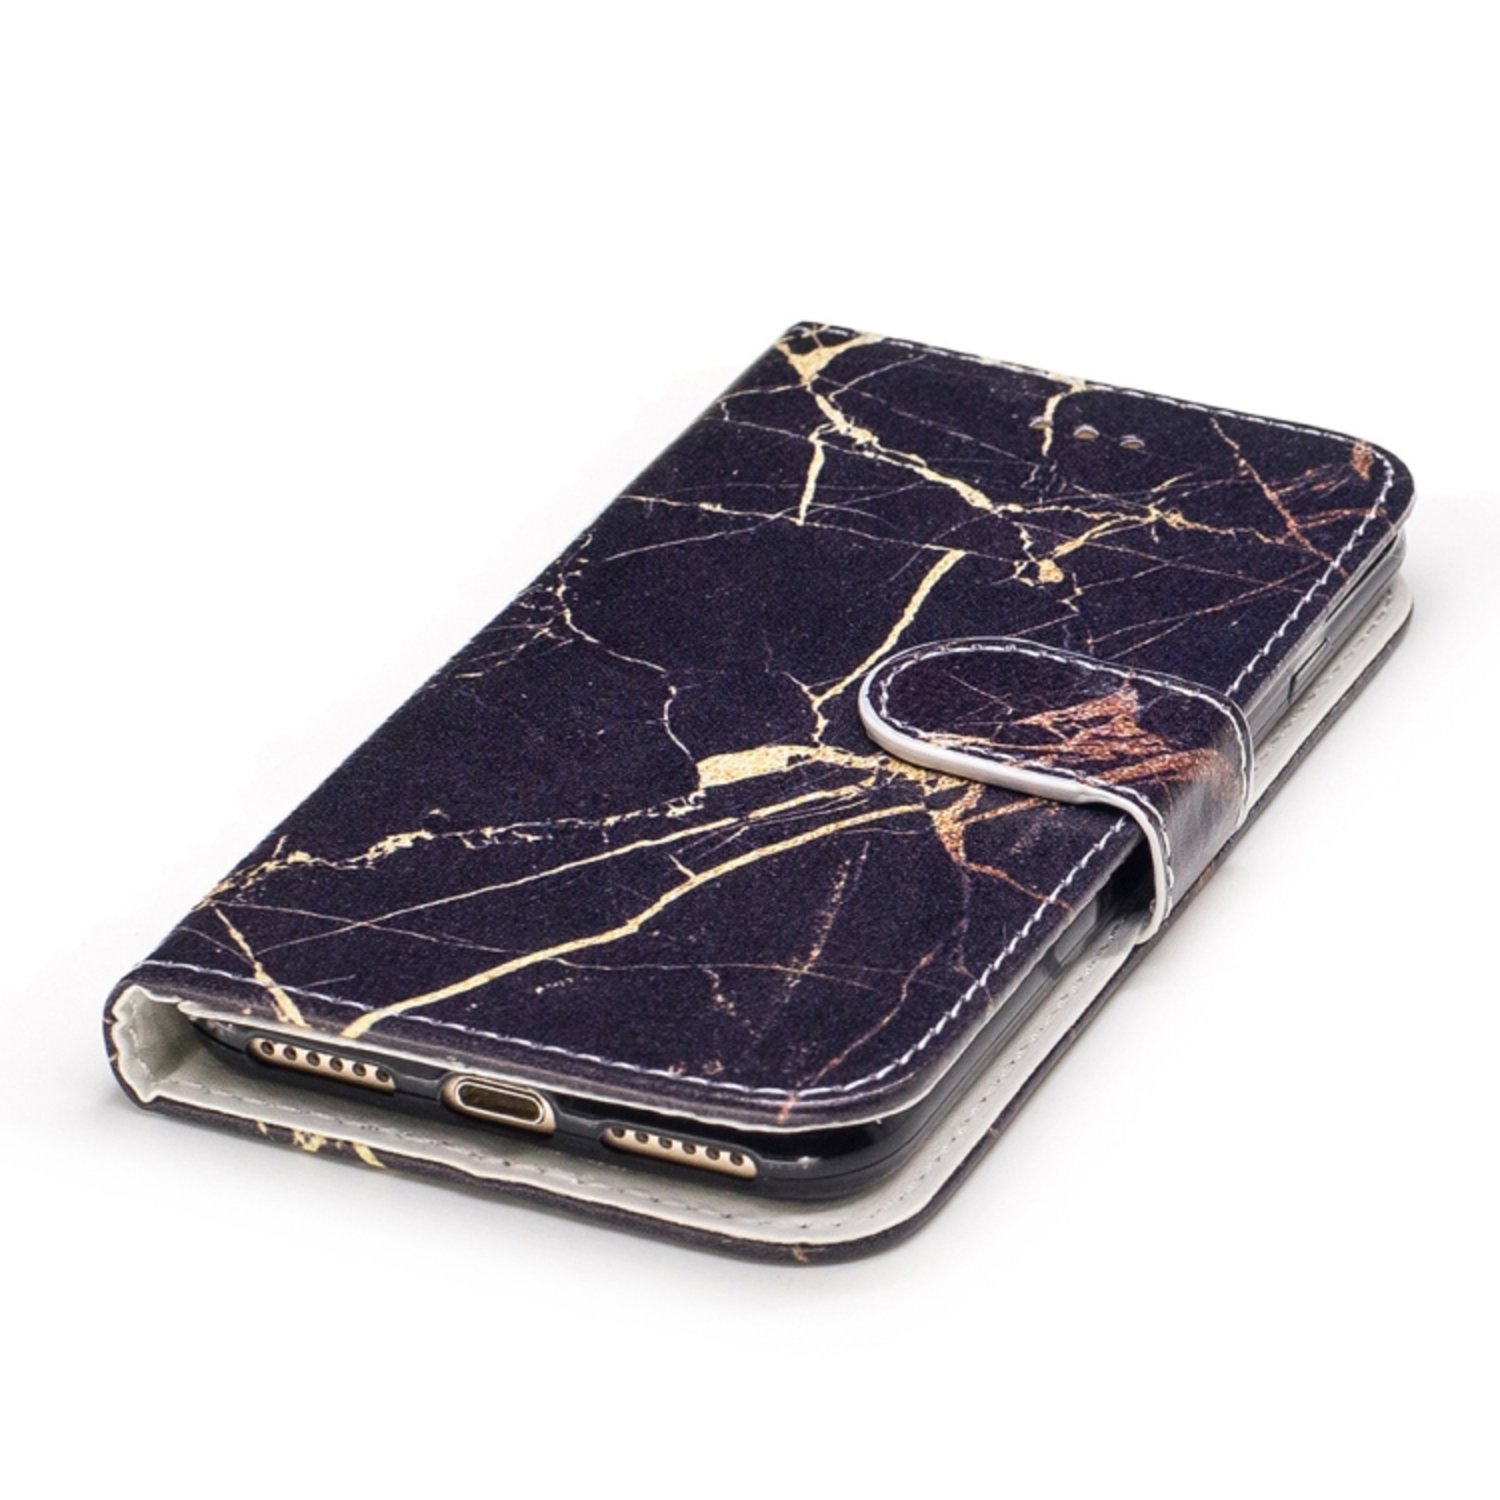 Plånbok i marmor för iPhone 7/8